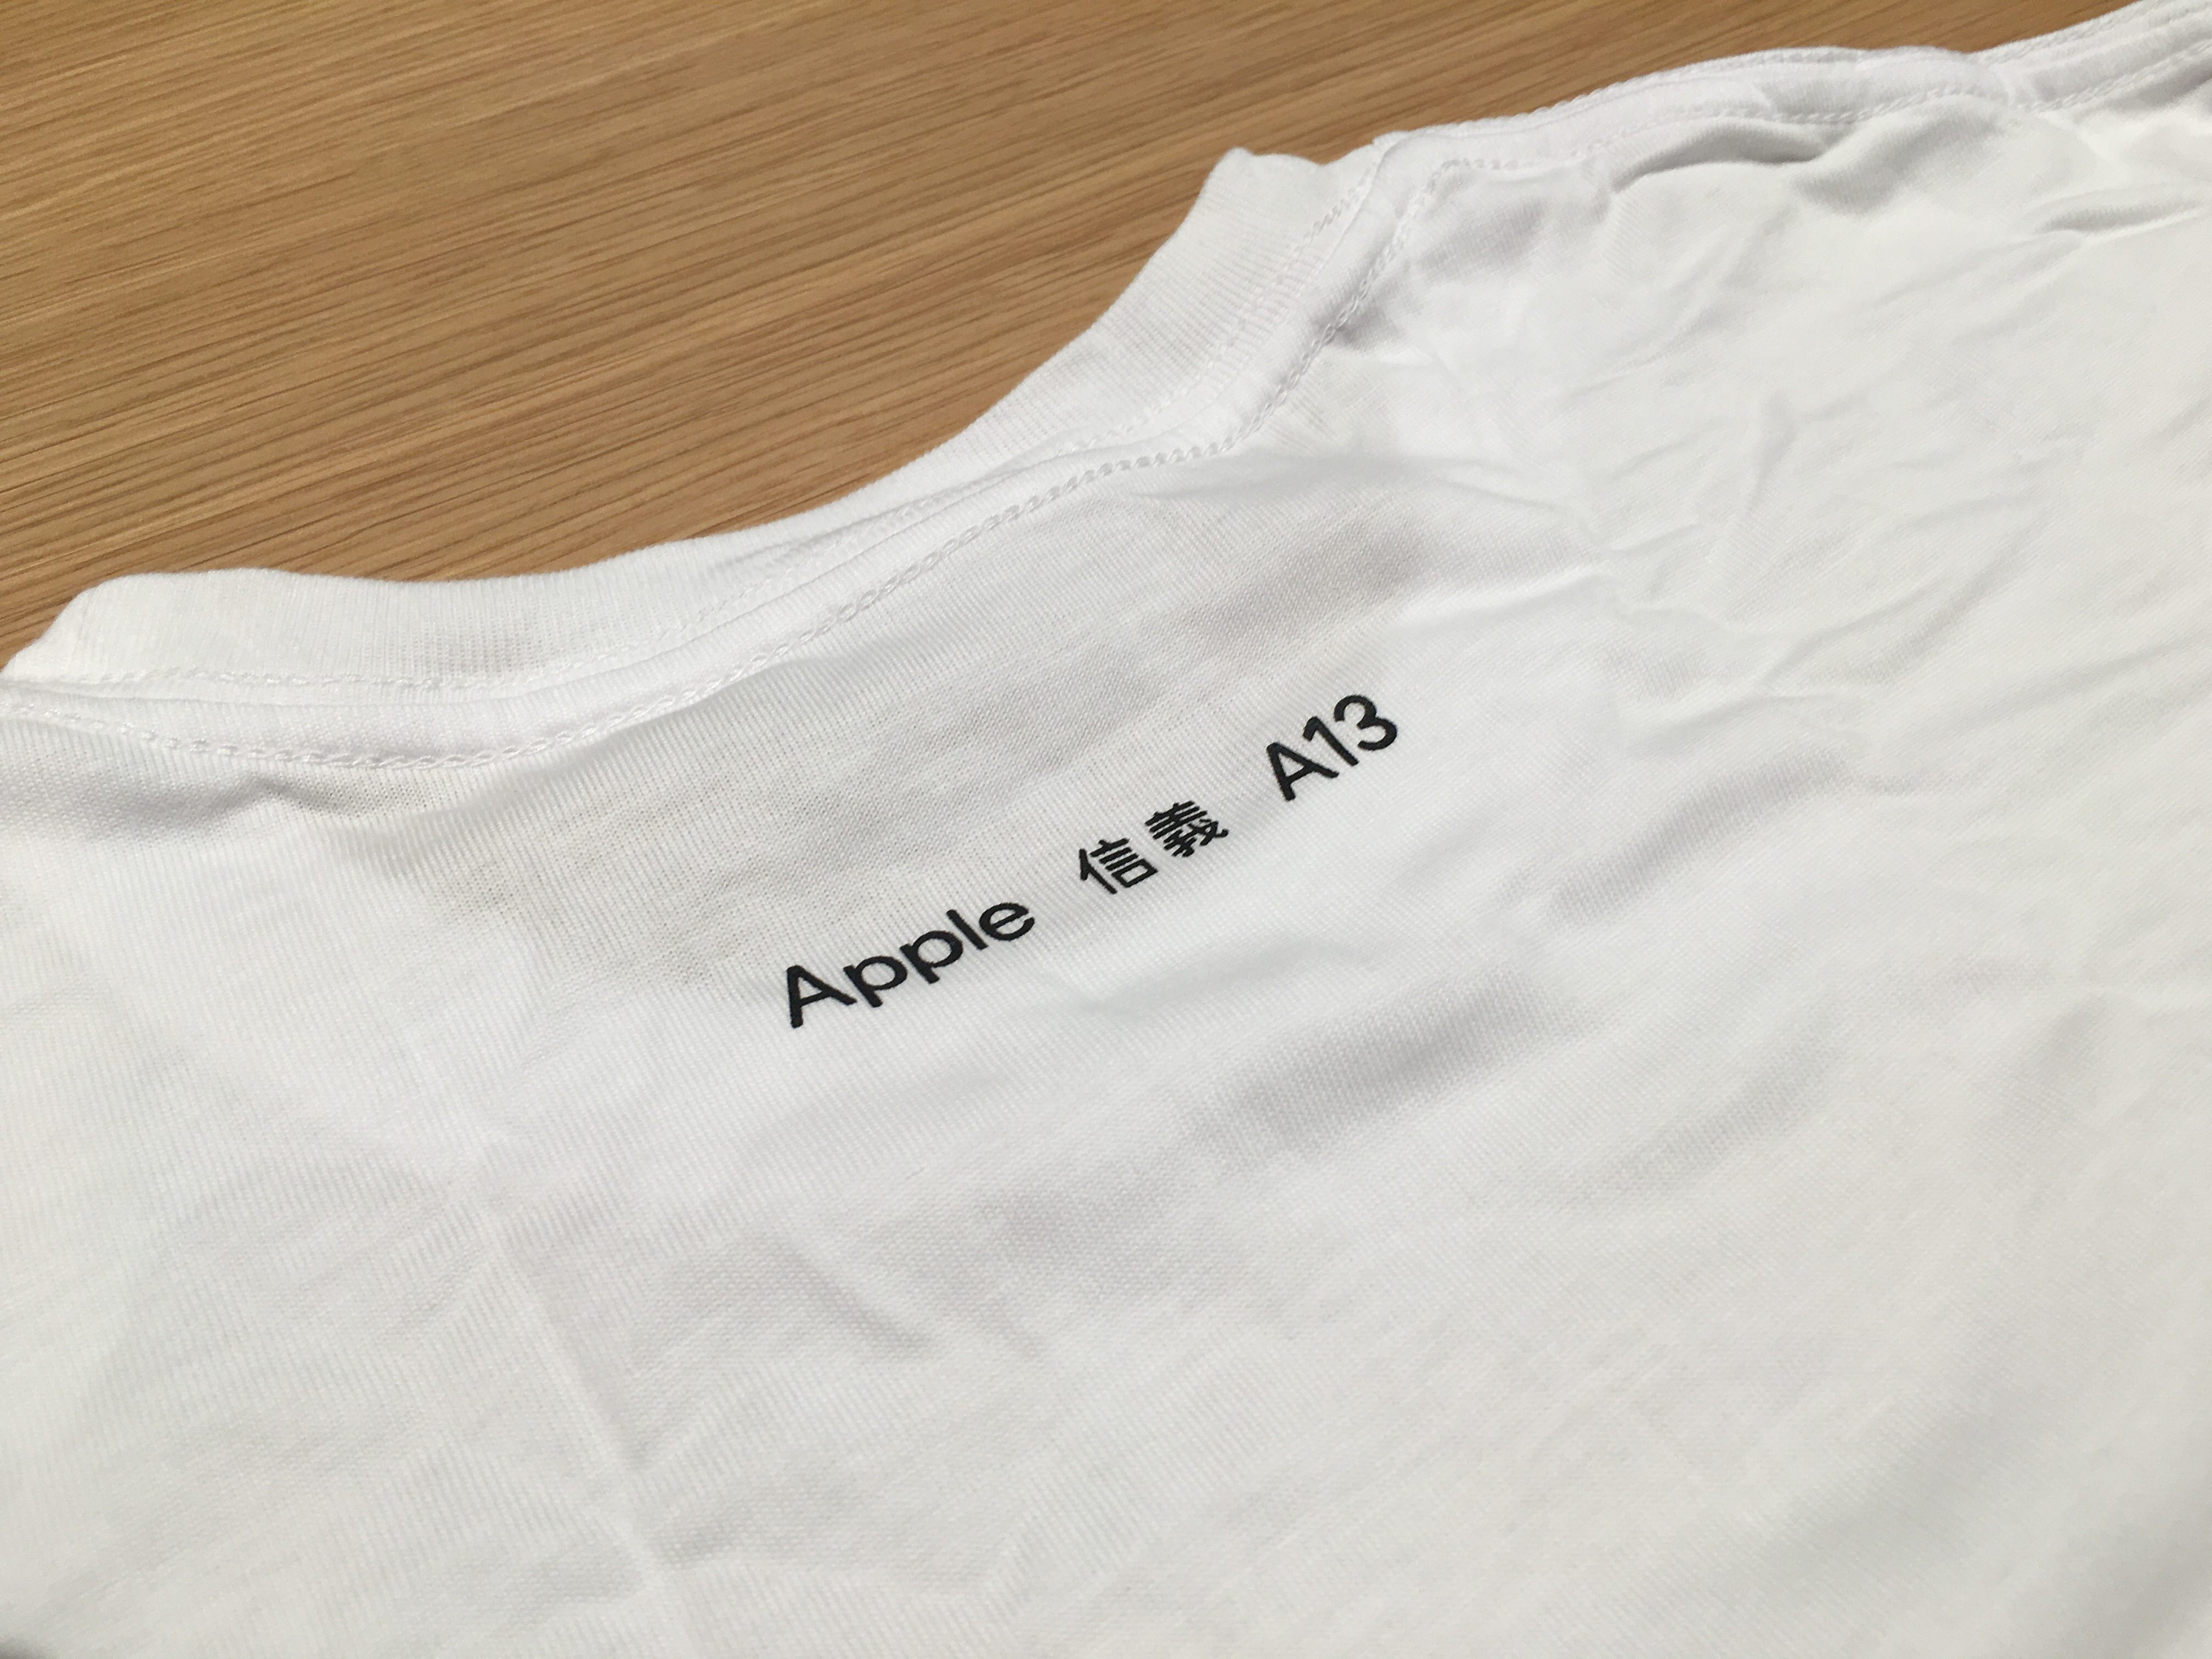 Apple Store 信義 A13 紀念衣